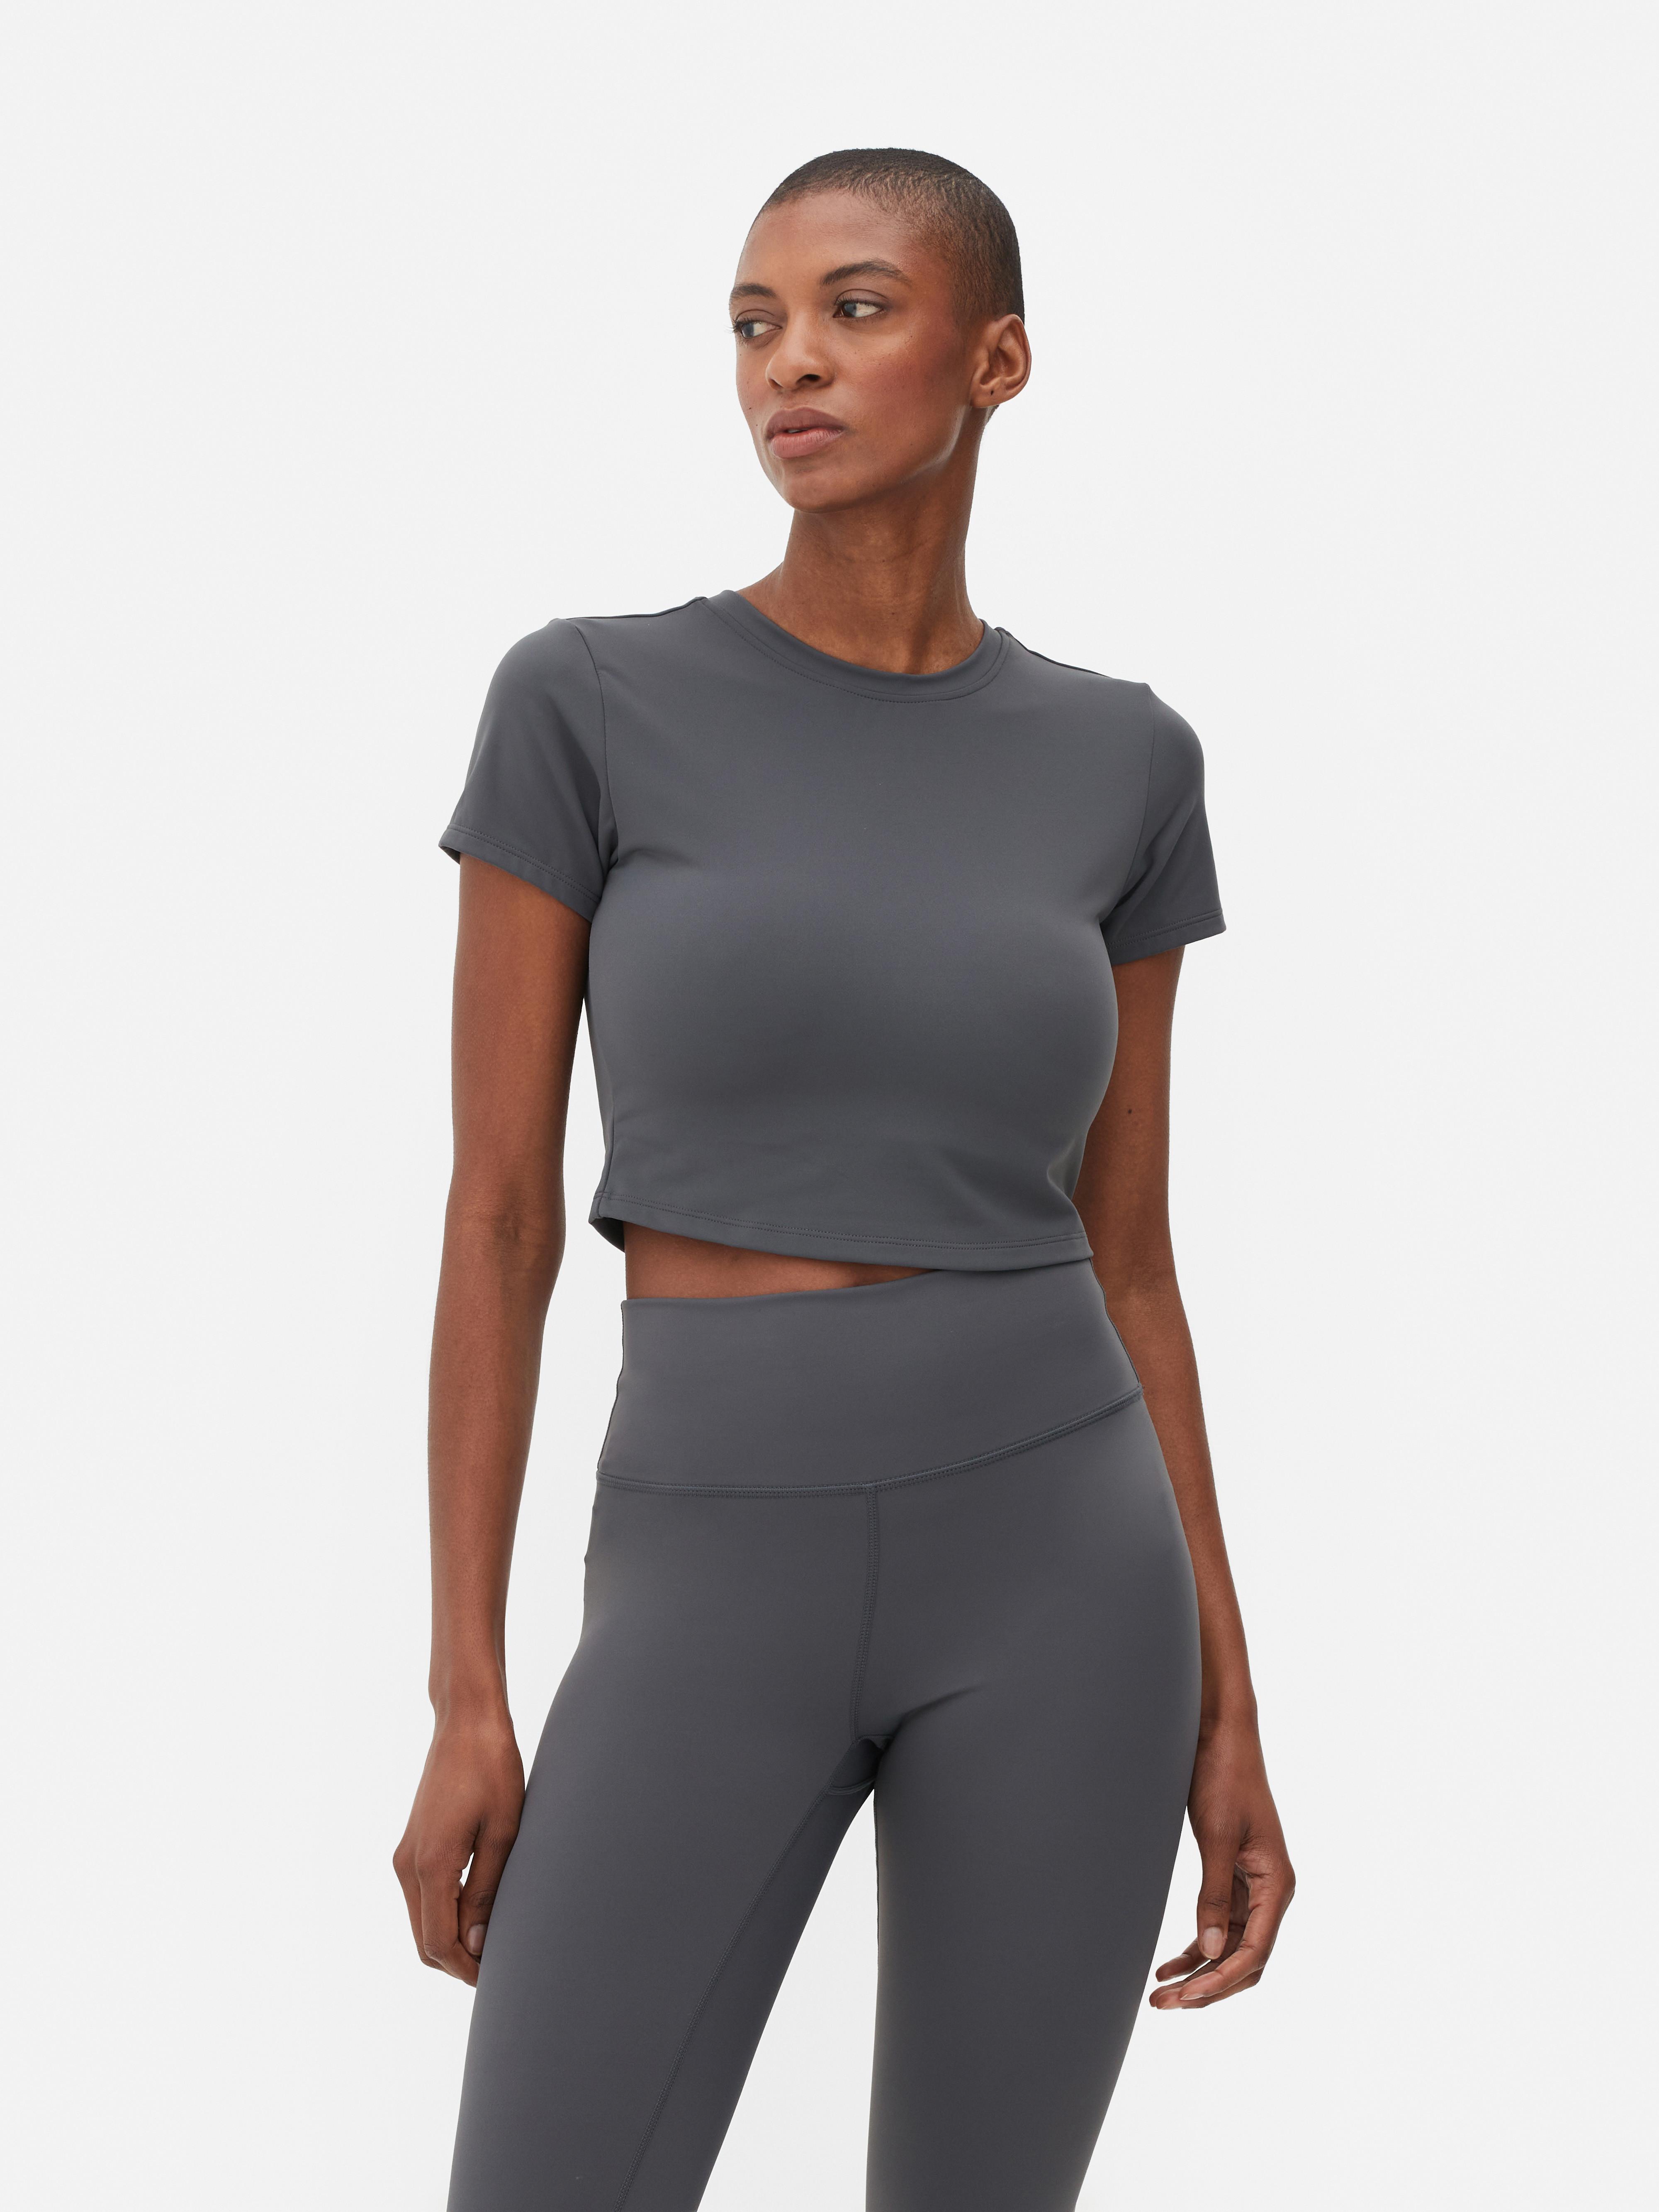 Women's Gray Performance Cropped T-Shirt | Primark